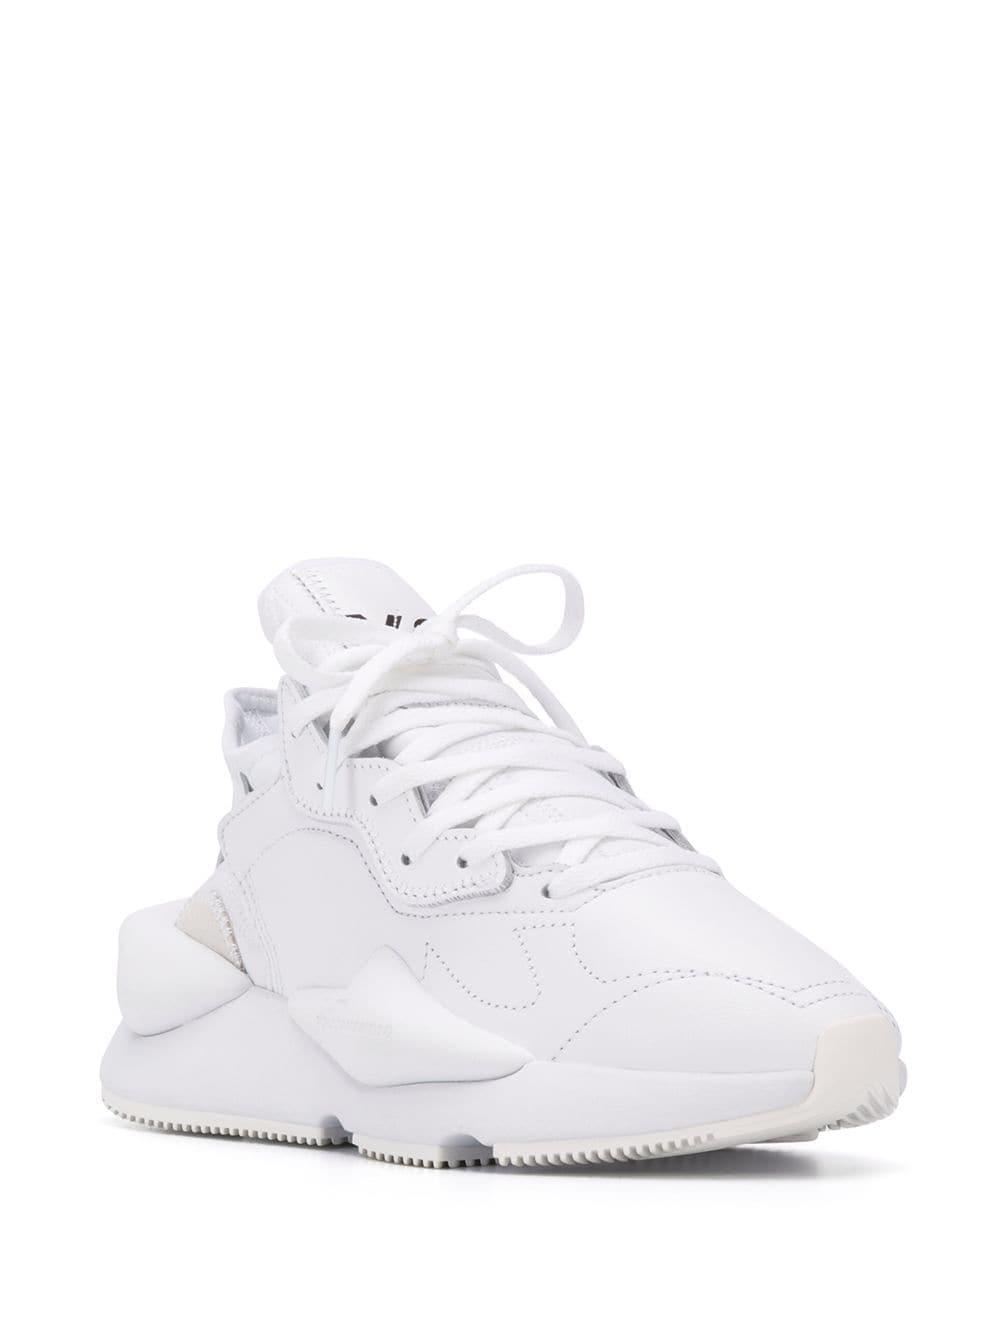 Y-3 Adidas Kaiwa Sneakers in White | Lyst